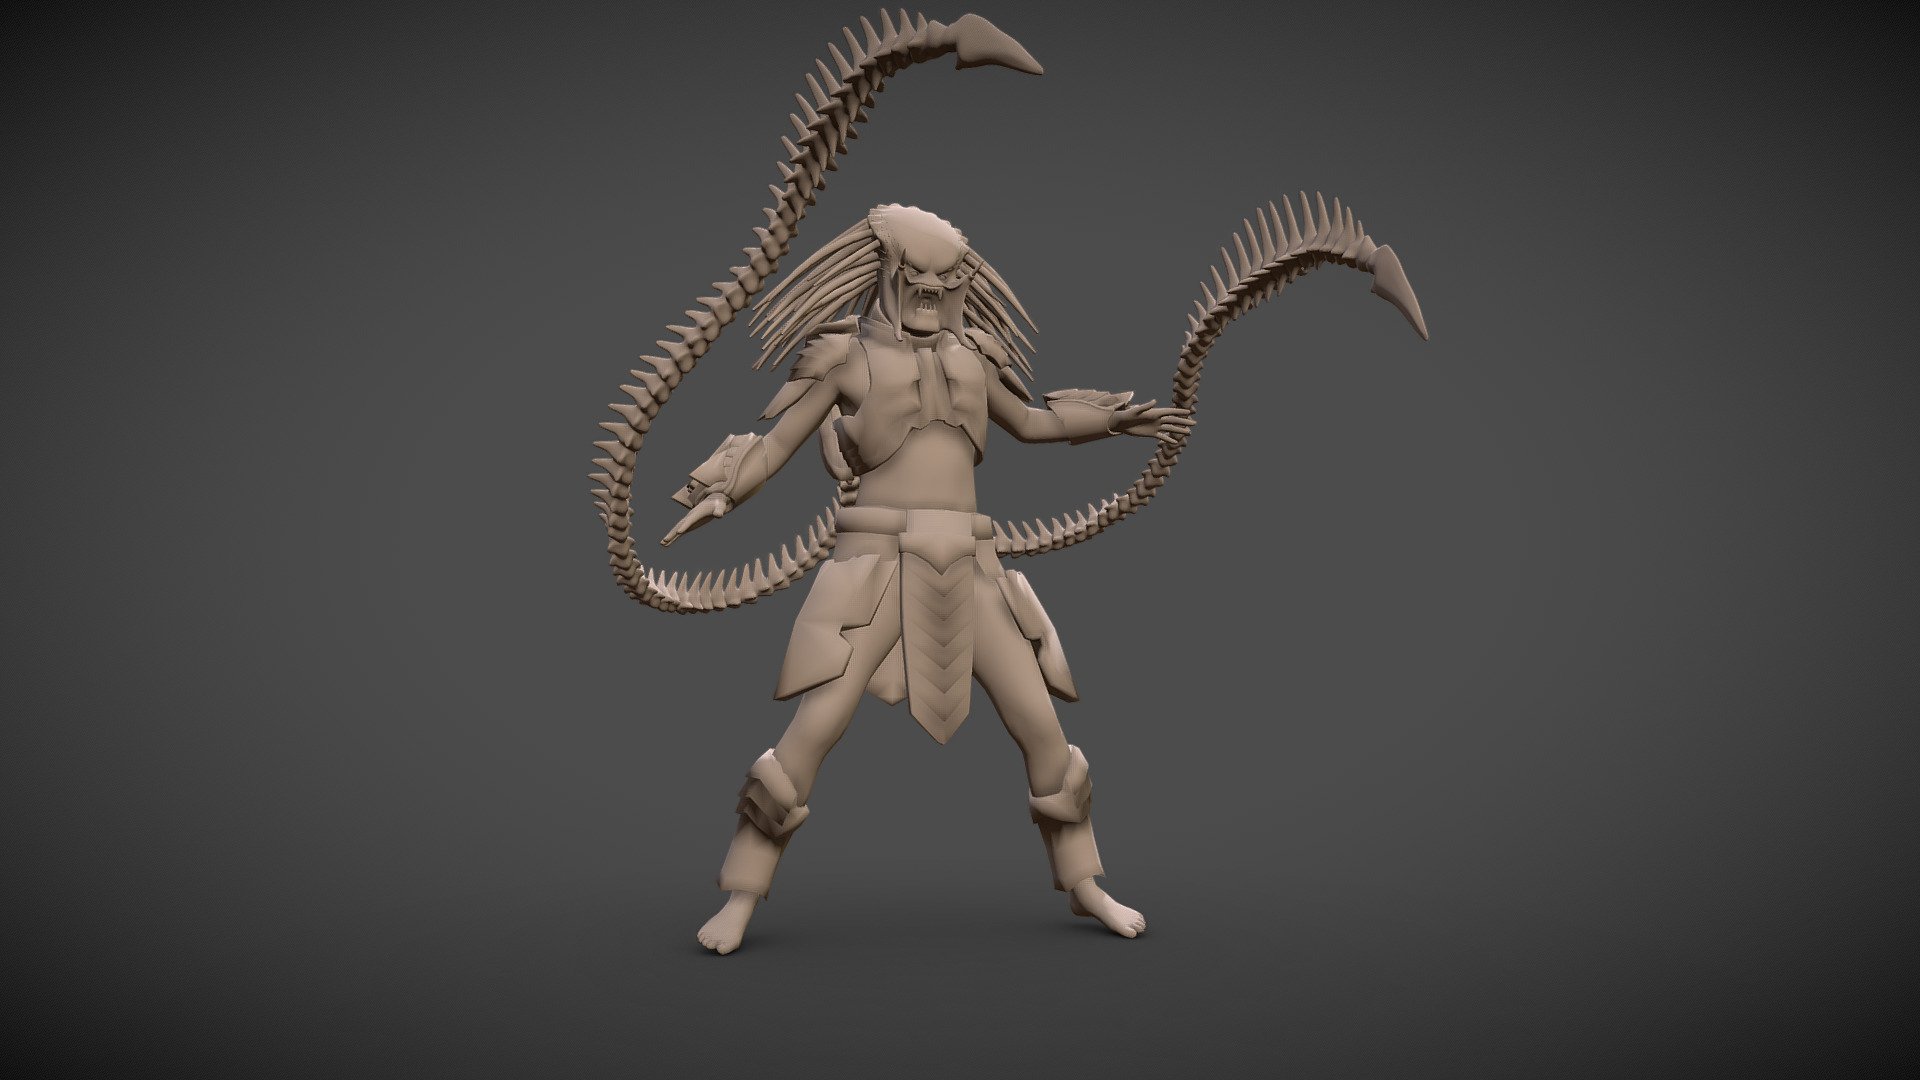 Predator clan leader prototype 1 - 3D model by MICH (@MICHilian) 3d model